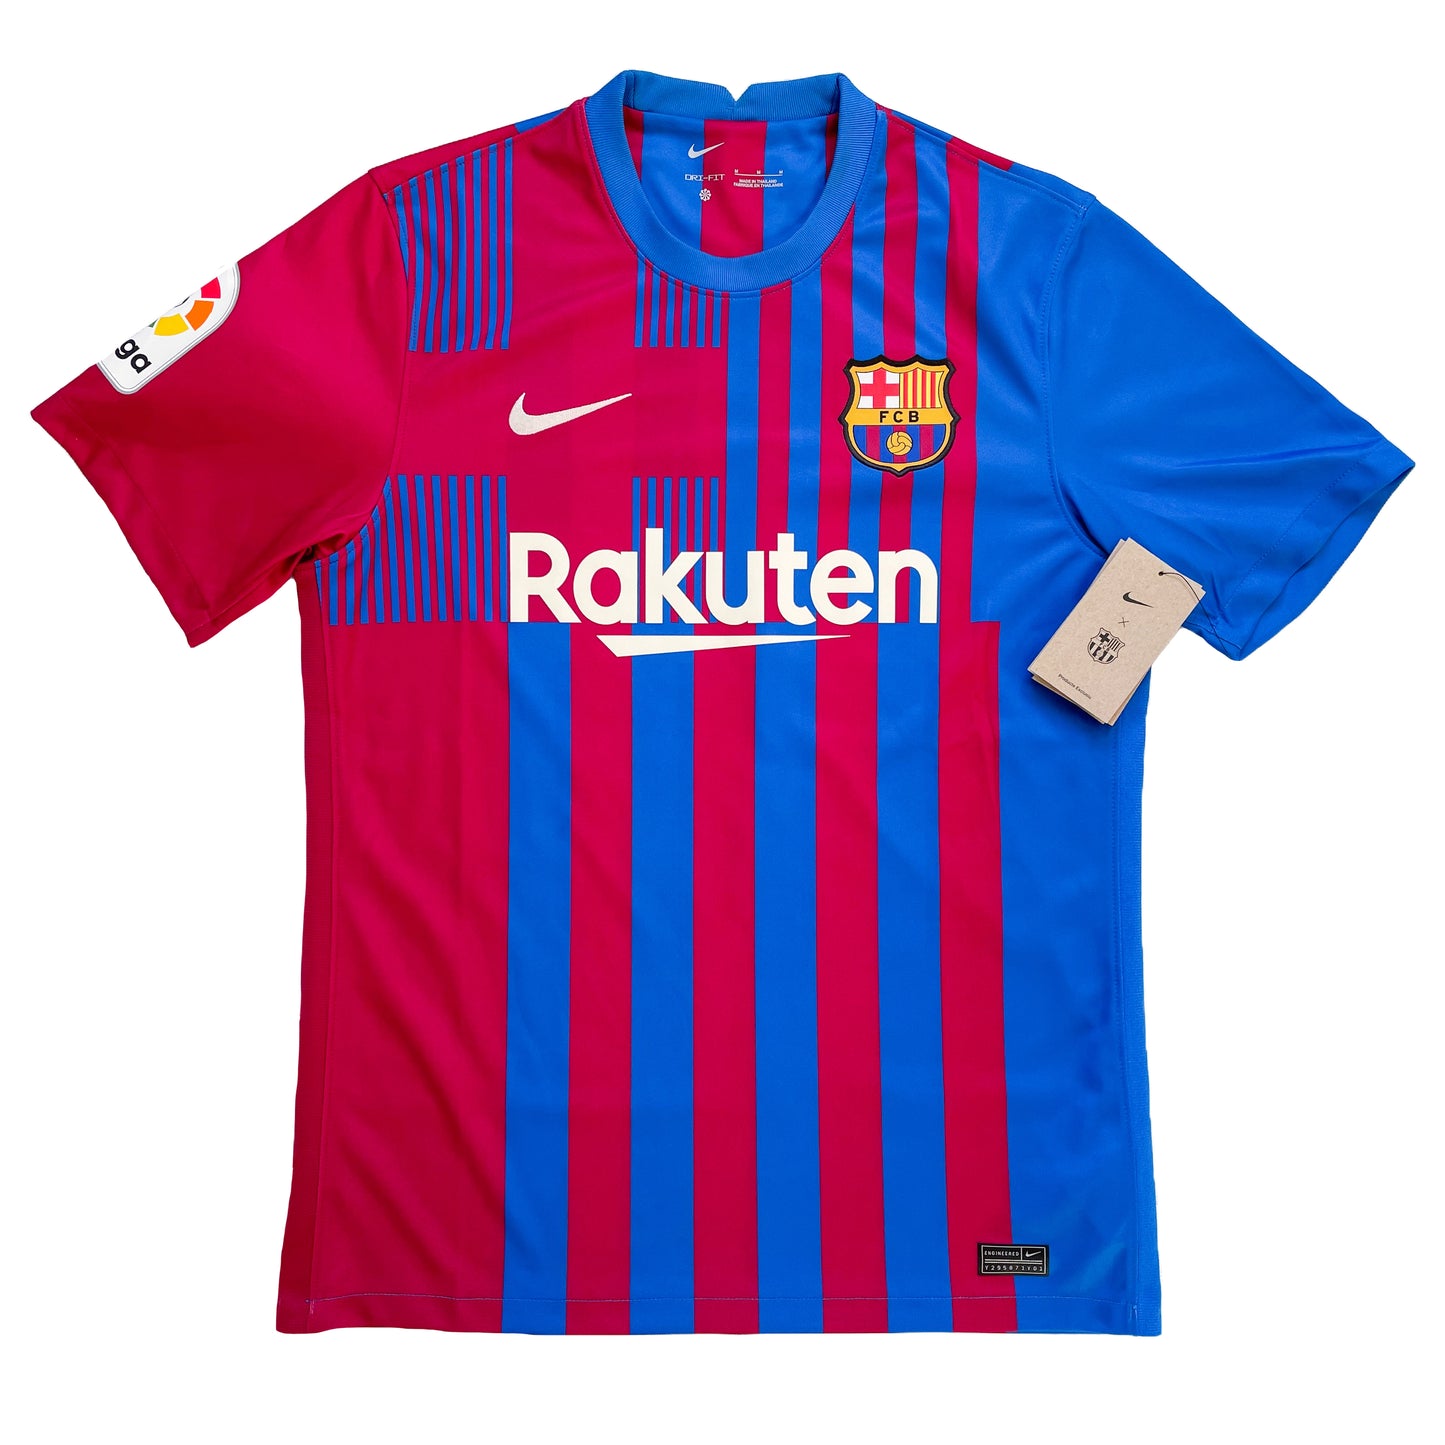 <tc>2021-2022 FC Barcelona camiseta local #30 Gavi (S, M)</tc>